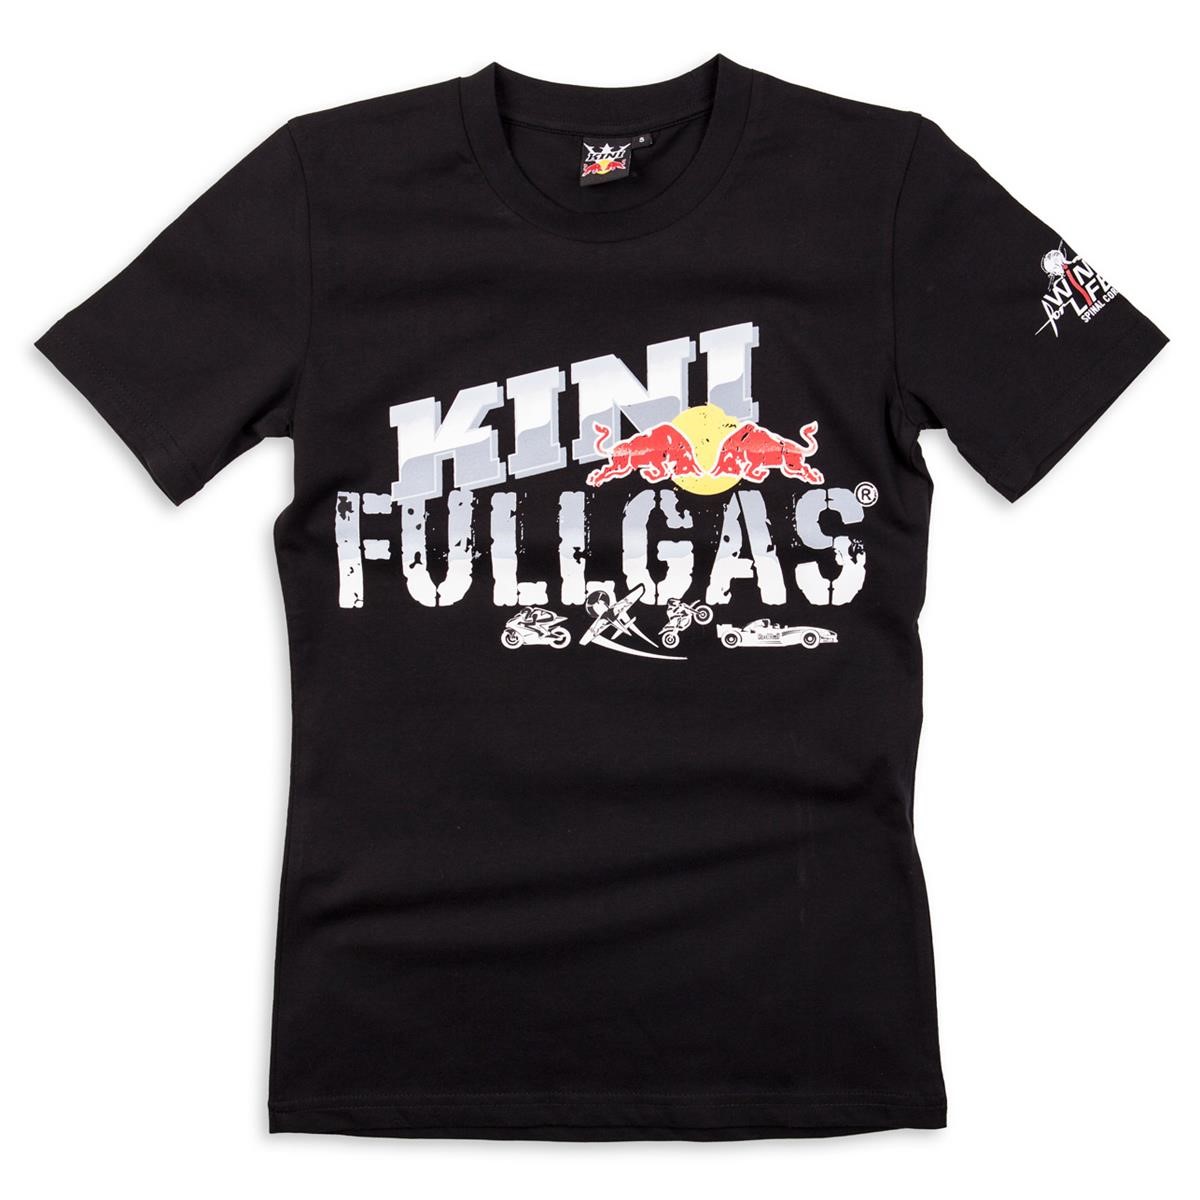 Kini Red Bull Girls T-Shirt Fullgas Black